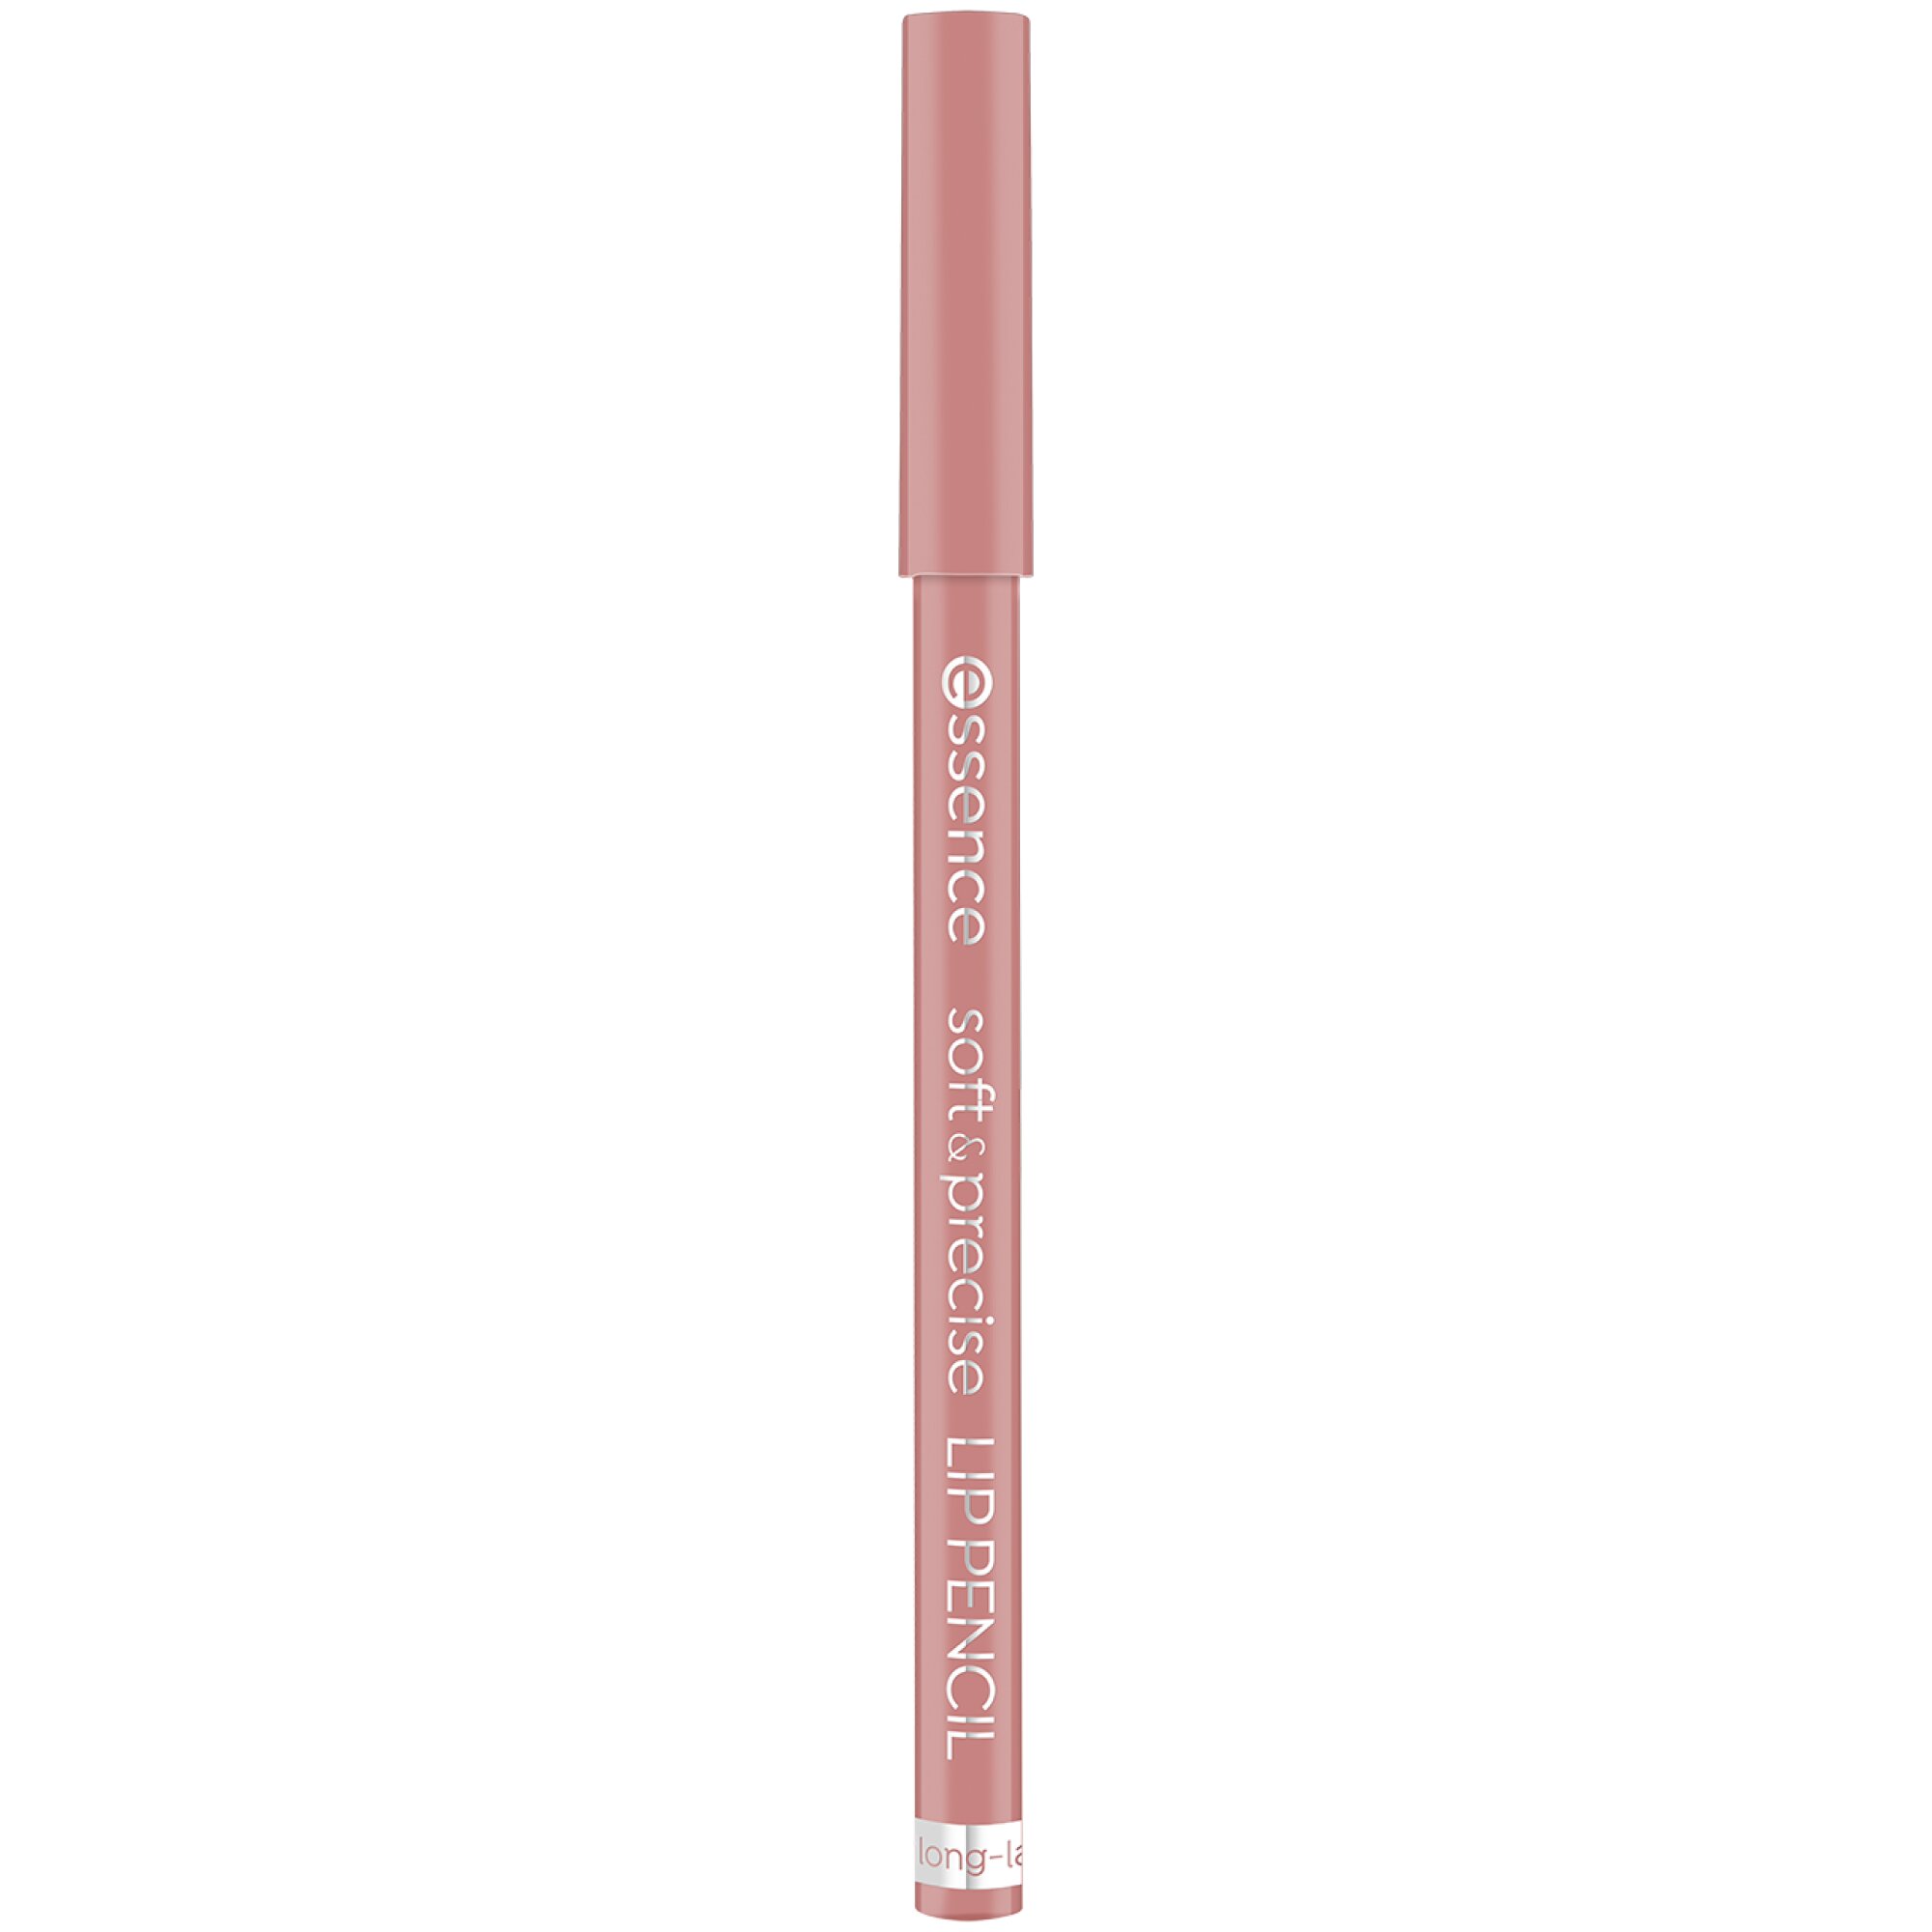 Creion pentru buze Soft & Precise, 302 - Heavenly, 0.78 g, Essence